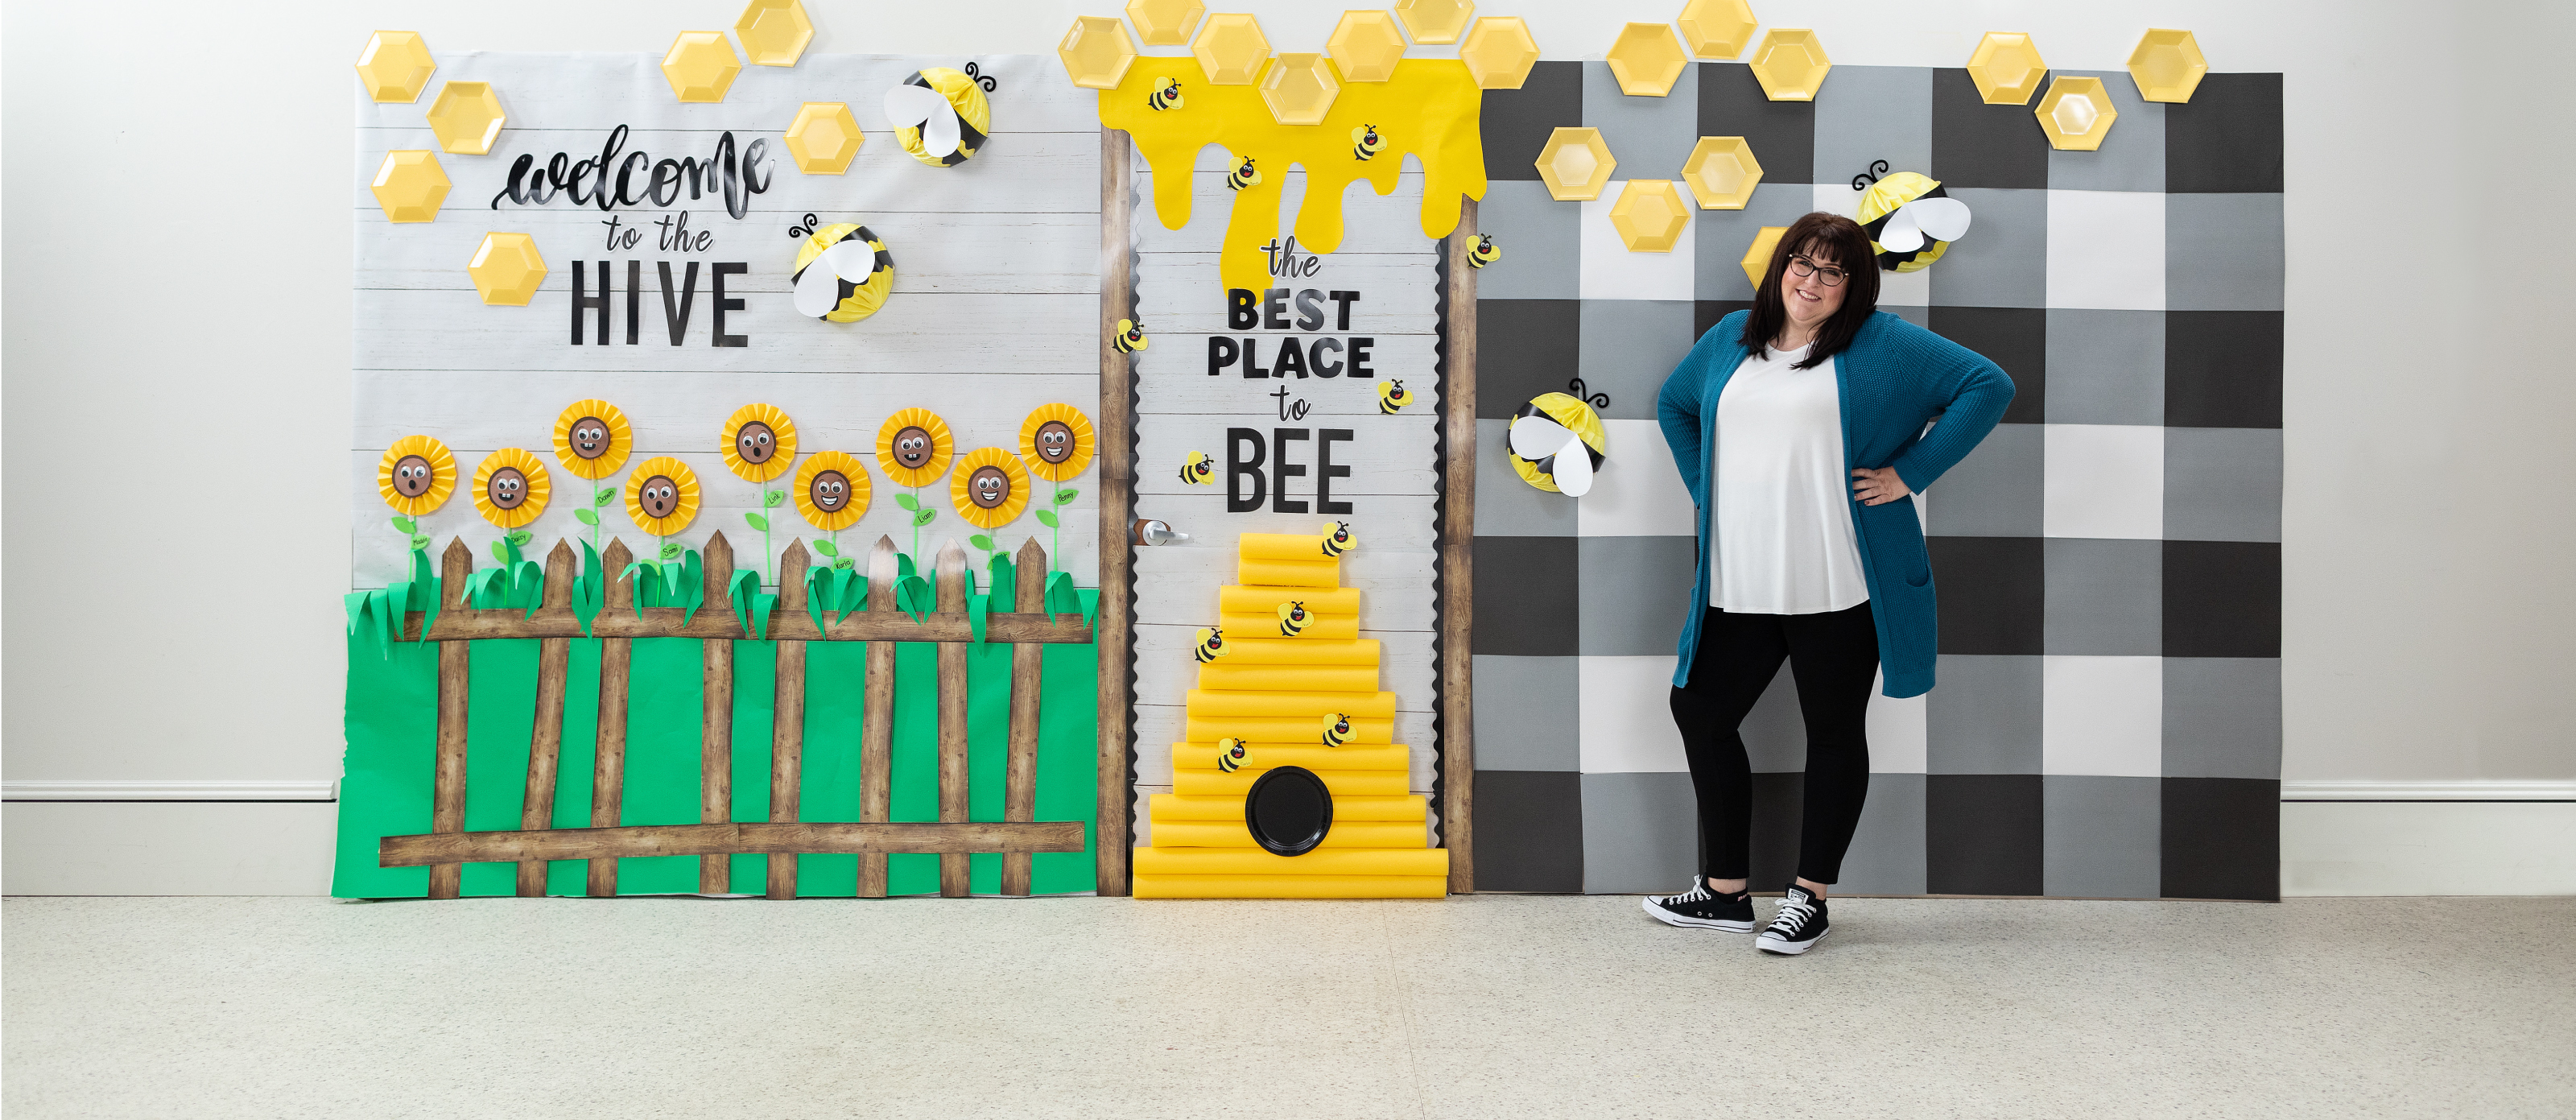 Bee Classroom Door Décor Idea